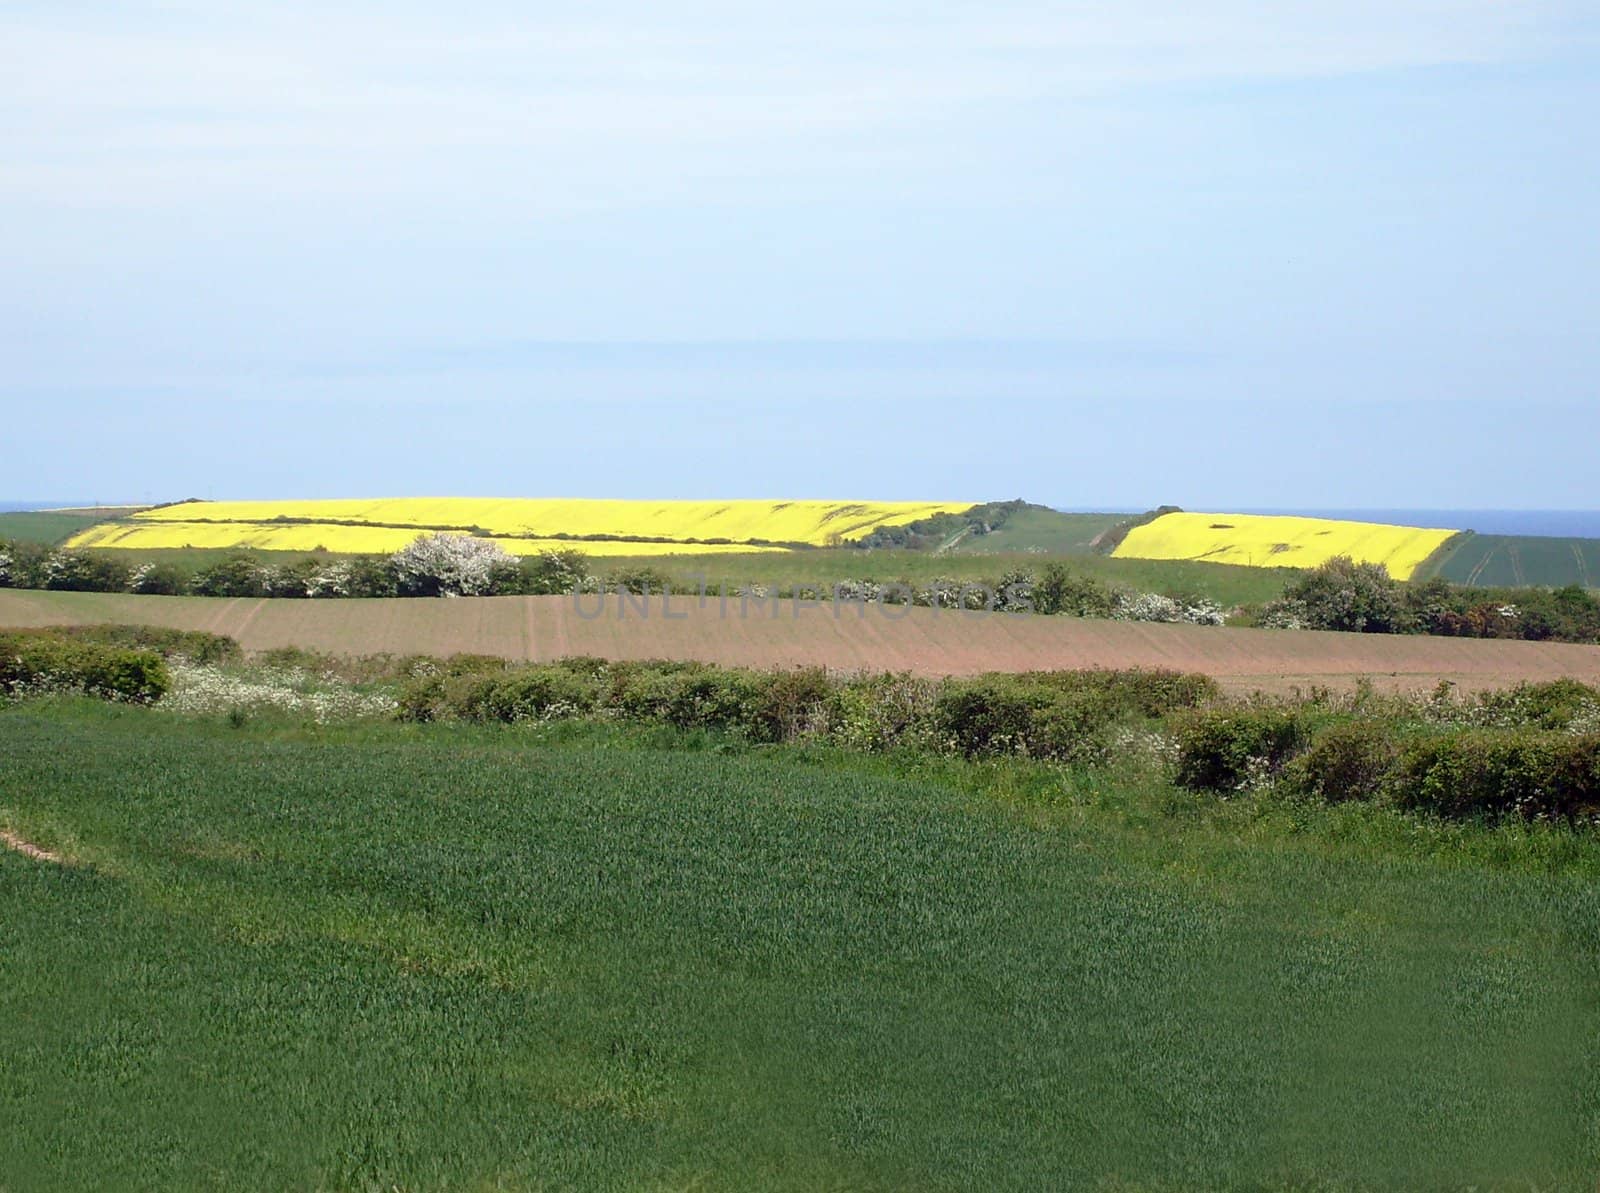 Rural landscape by speedfighter